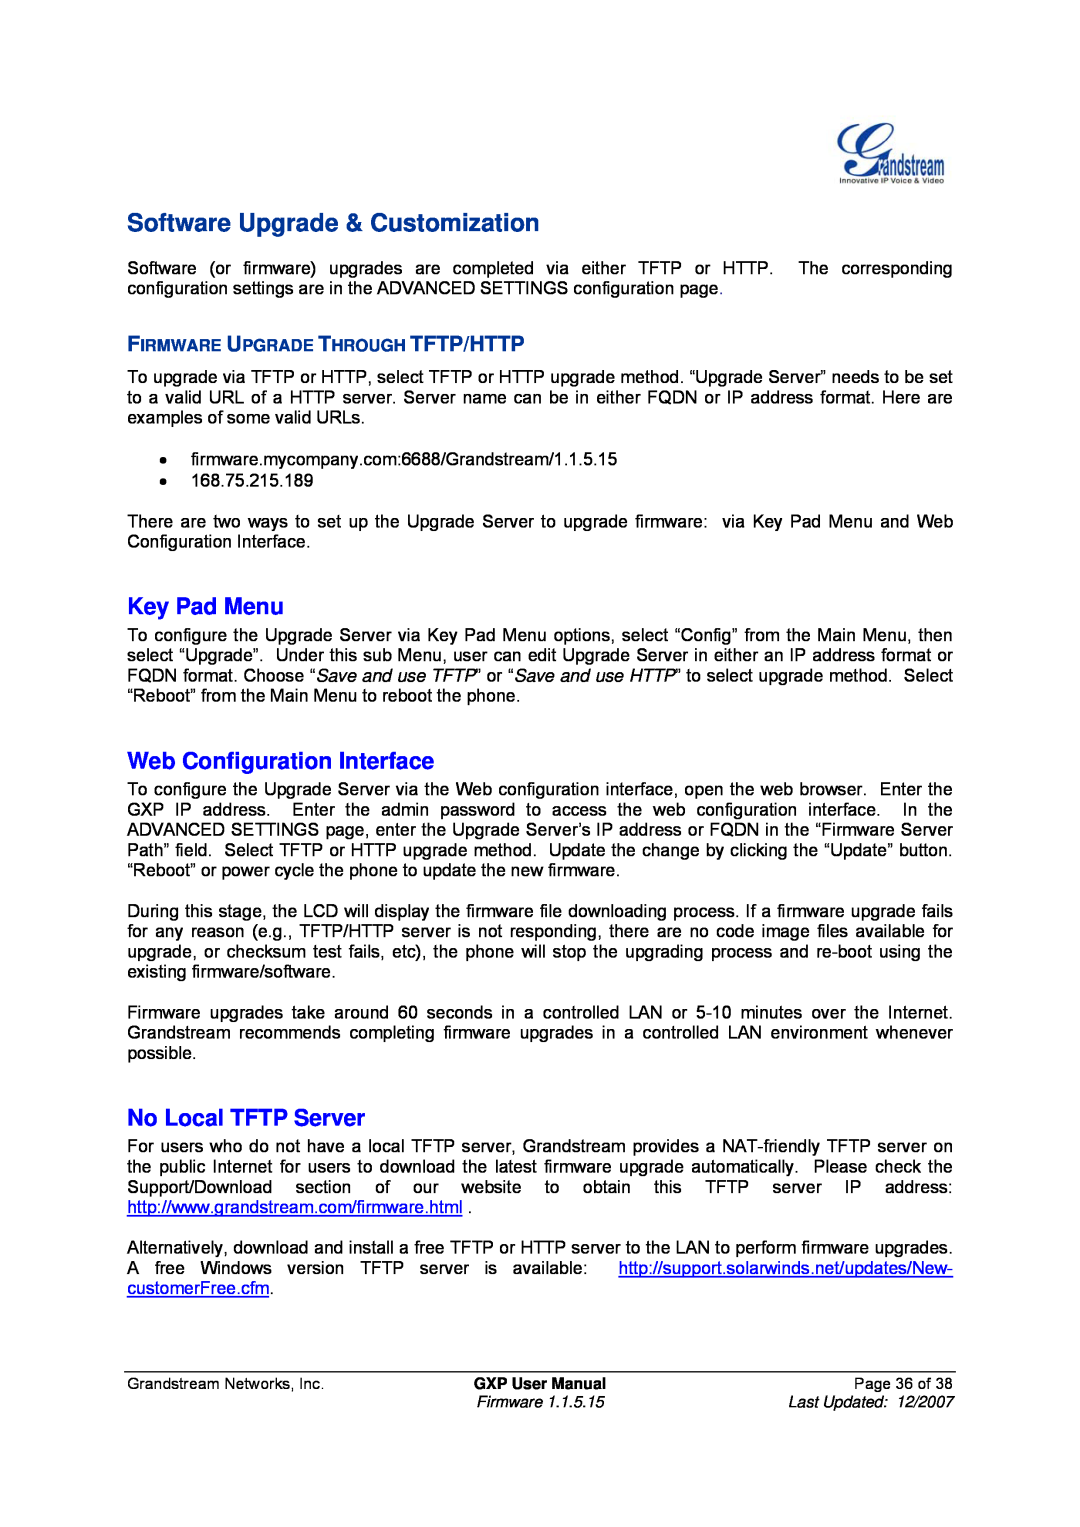 Grandstream Networks GXP-2010, GXP-1200 manual Software Upgrade & Customization, Key Pad Menu, Web Configuration Interface 